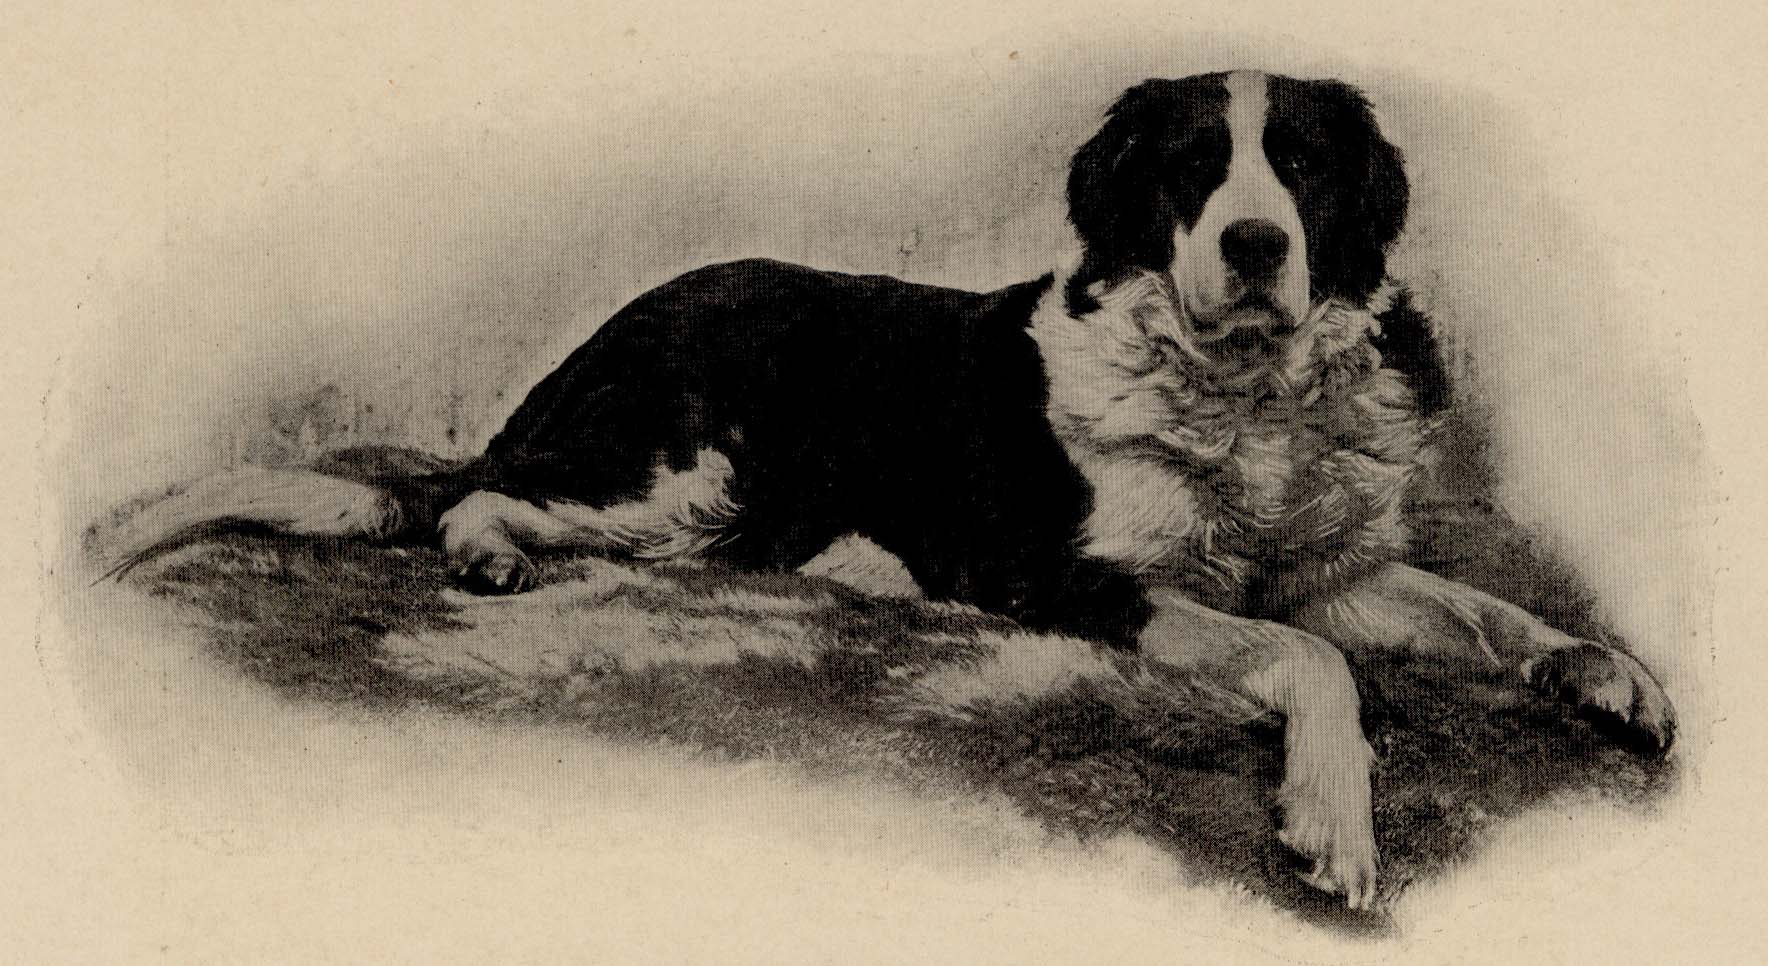 Hector, a big St. Bernard dog.